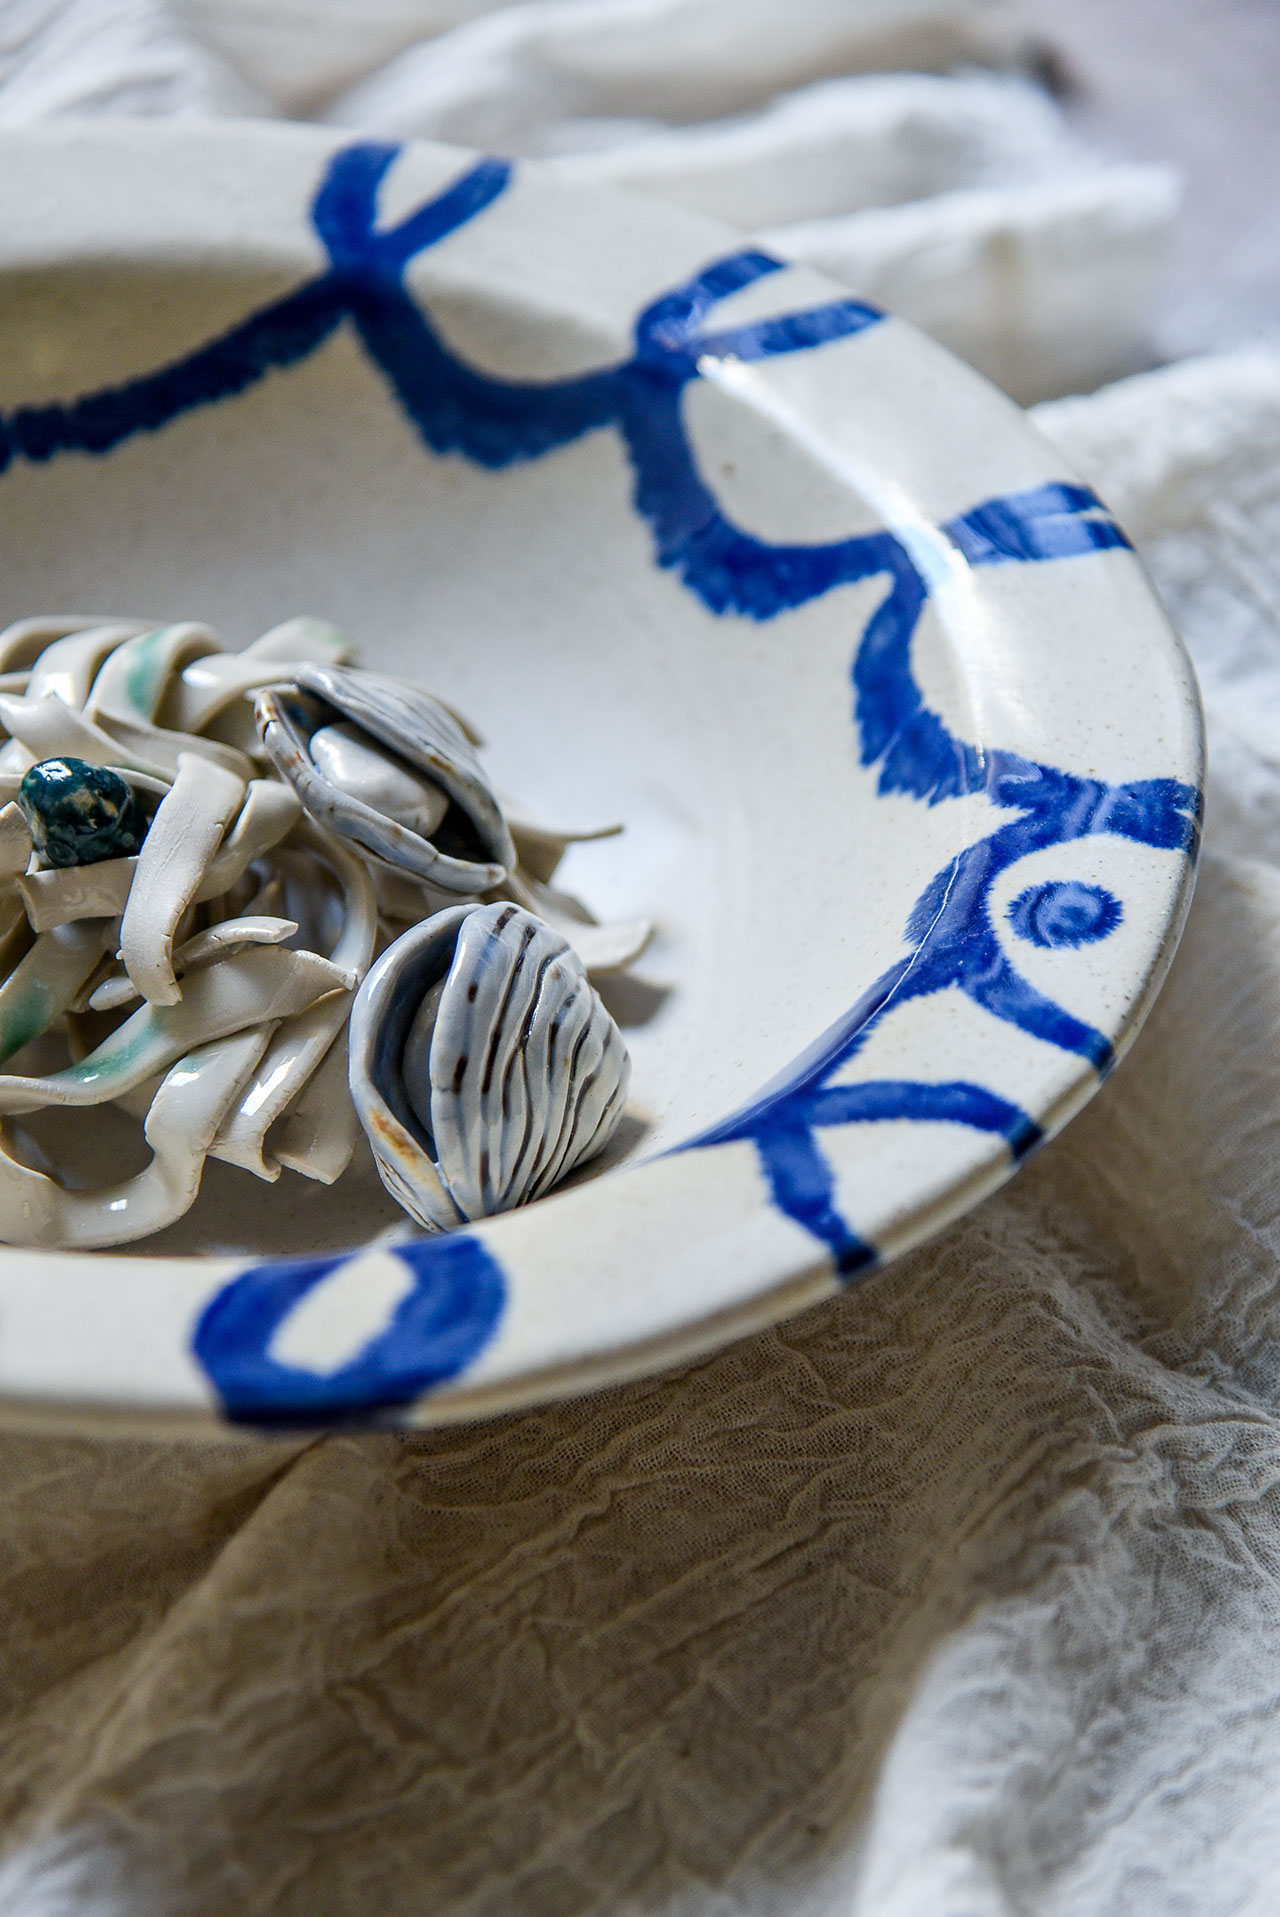 达芙妮·莱昂 (Daphne Leon) 为 Oursin 设计的陶瓷。 Nastazia Arapoglou 摄。